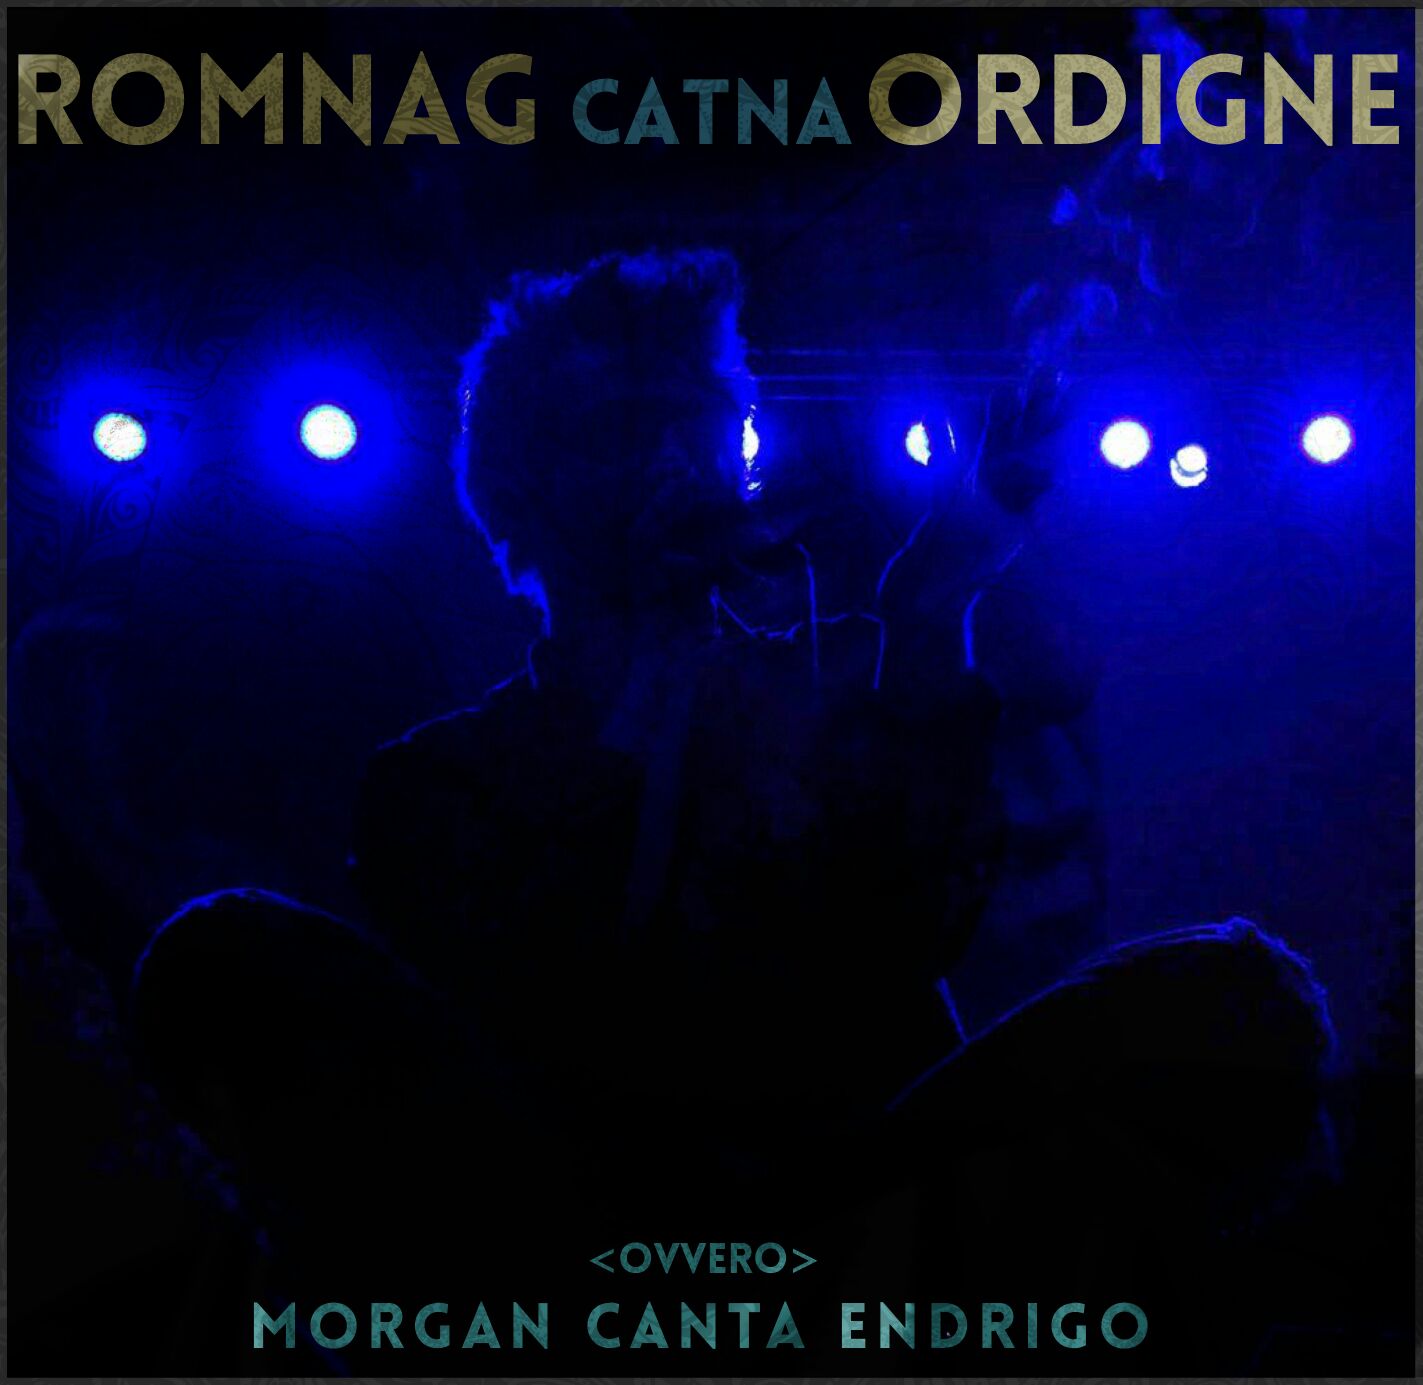 Romnag canta Ordigne (Morgan canta Endrigo) - Ordigne